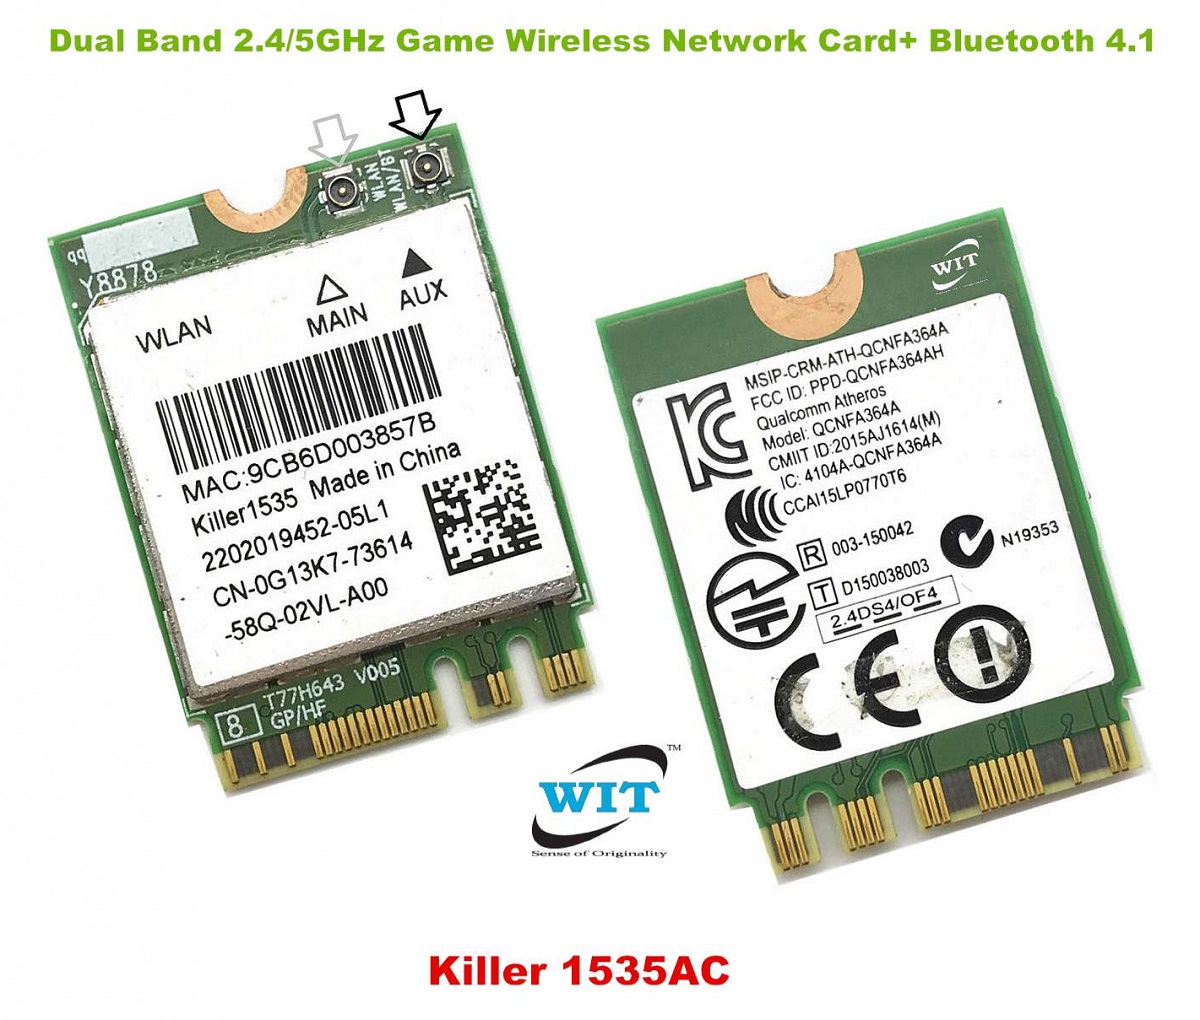 Atheros Killer 1535 AC (Killer 1535AC), QCNFA364A, 2.4G/5G, Dual Band  802.11ac NGFF M.2 867Mbps Bluetooth 4.1 High Speed Game Wireless Network  Card